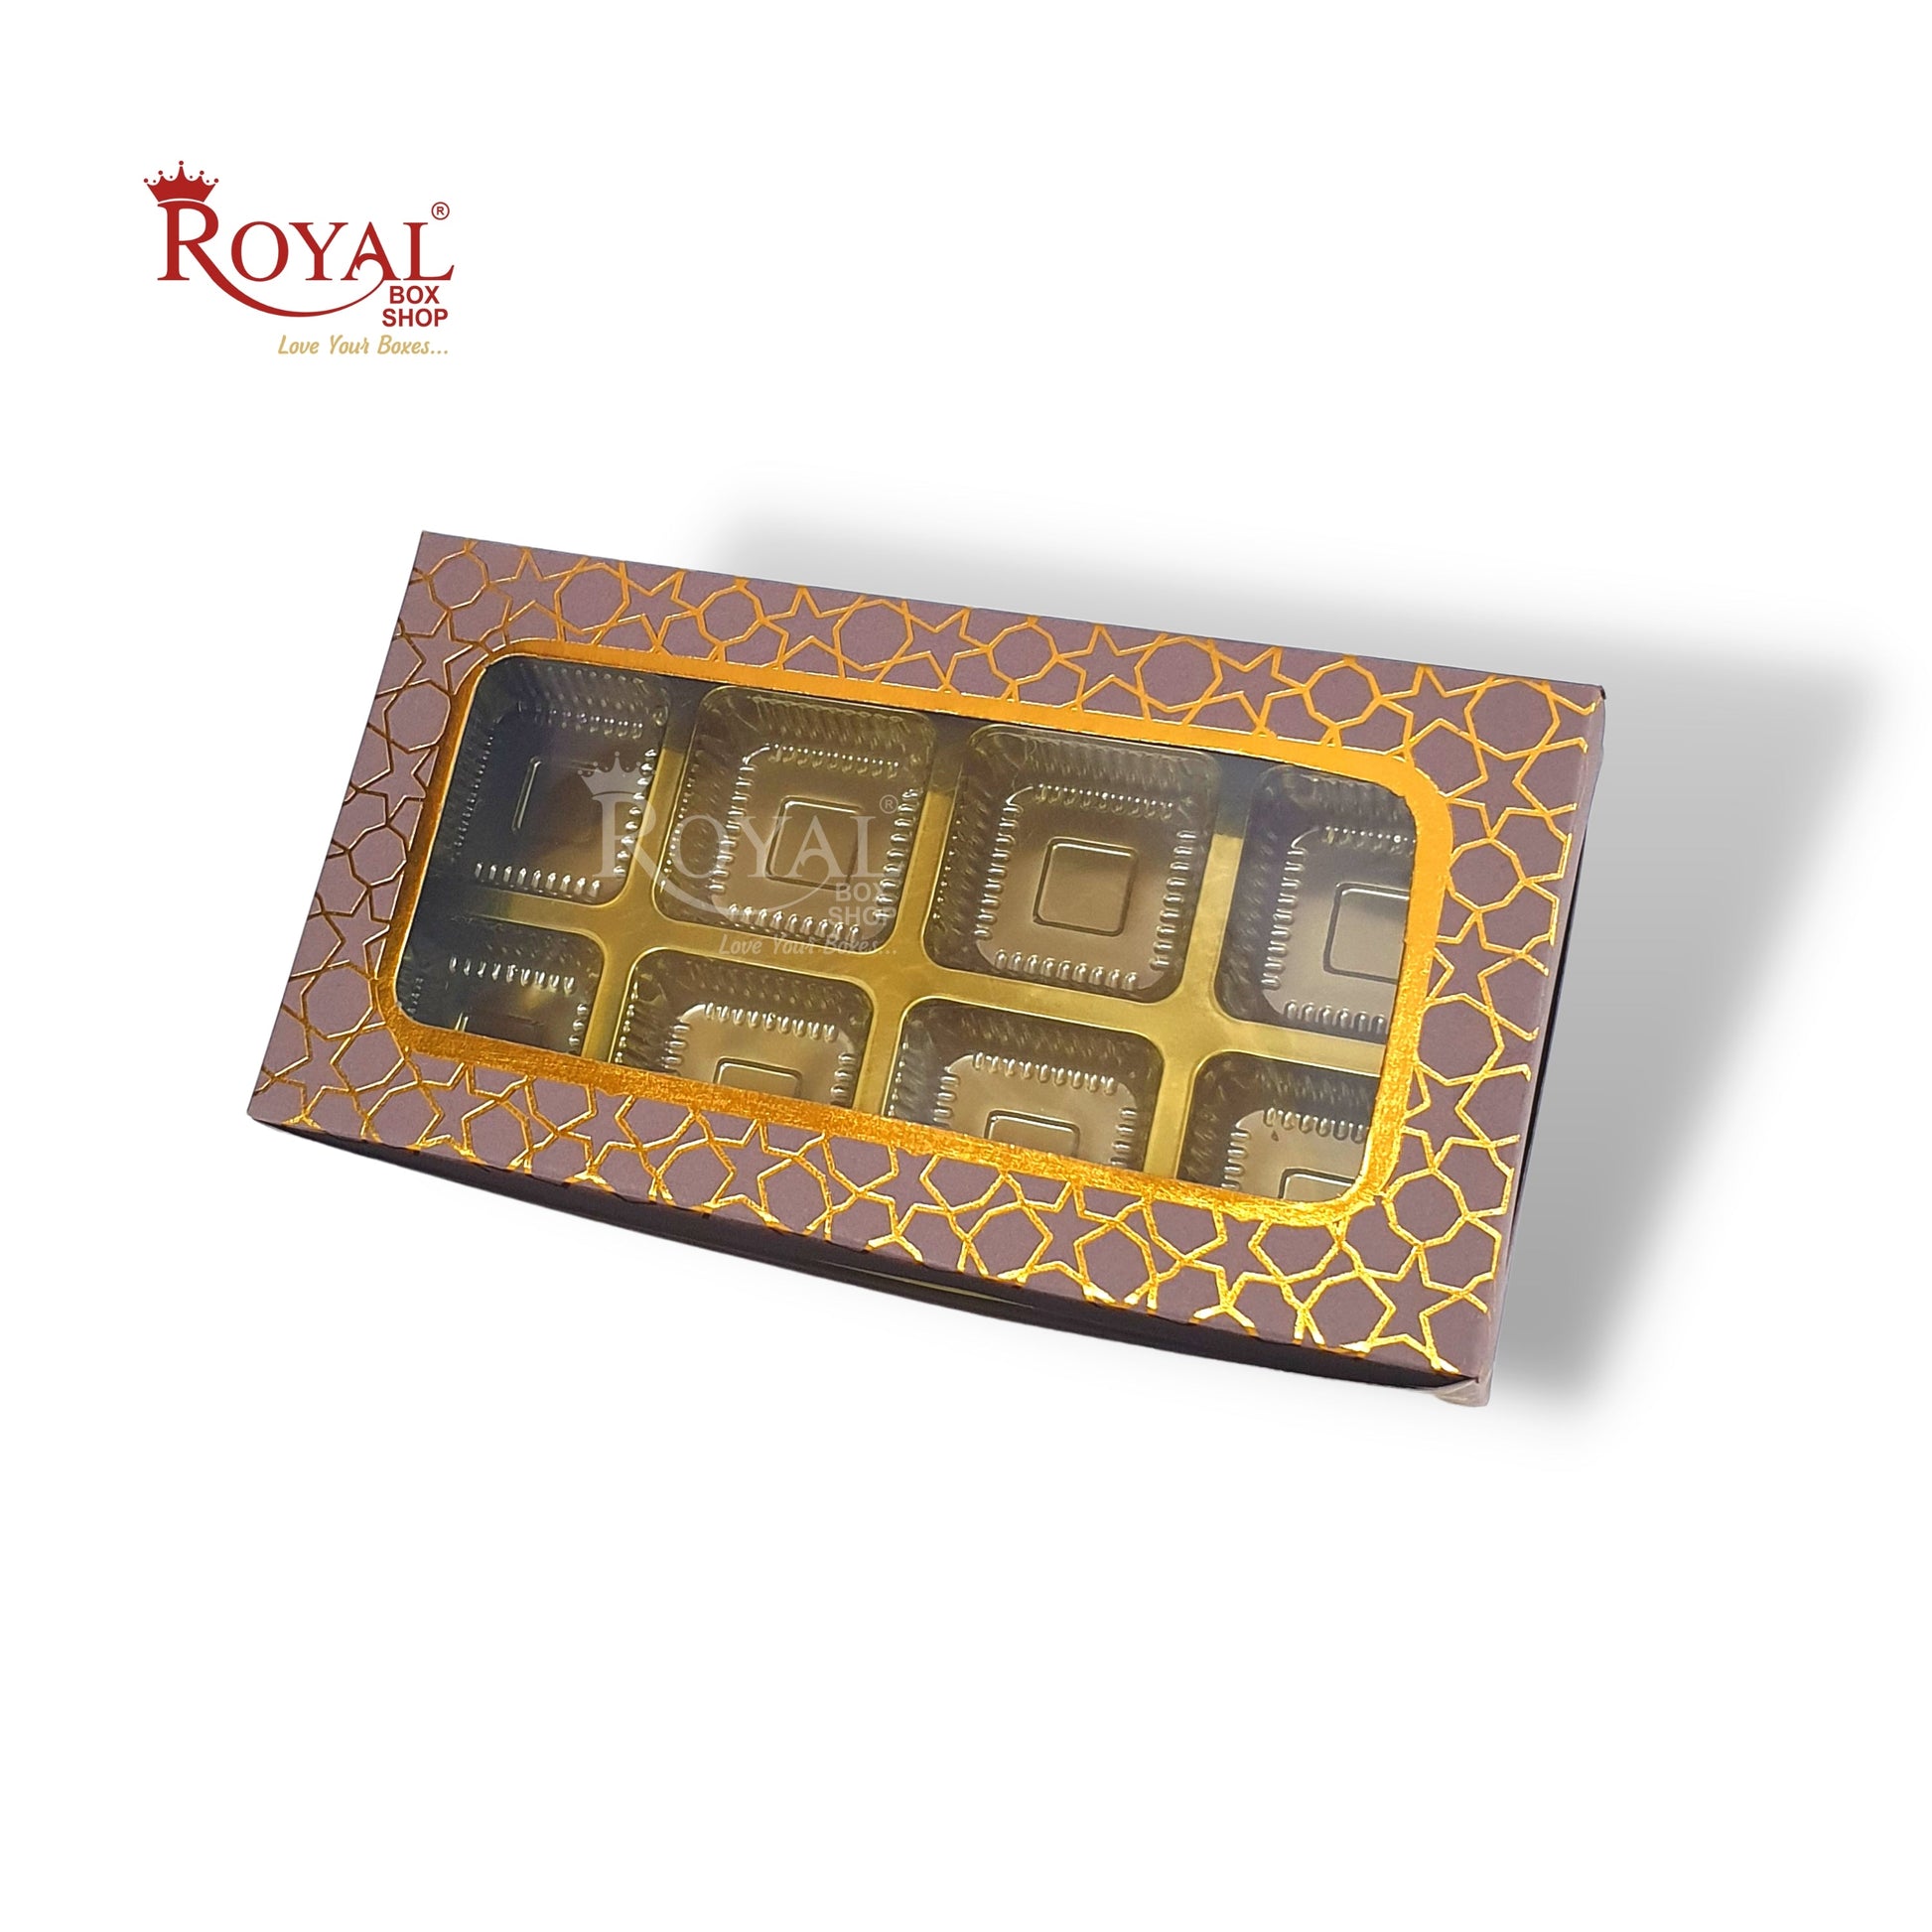 8 Cavity Chocolate Boxes  I 7.5 x 4 x 1.25 inch I Brown I For Christmas Gifting Royal Box Shop